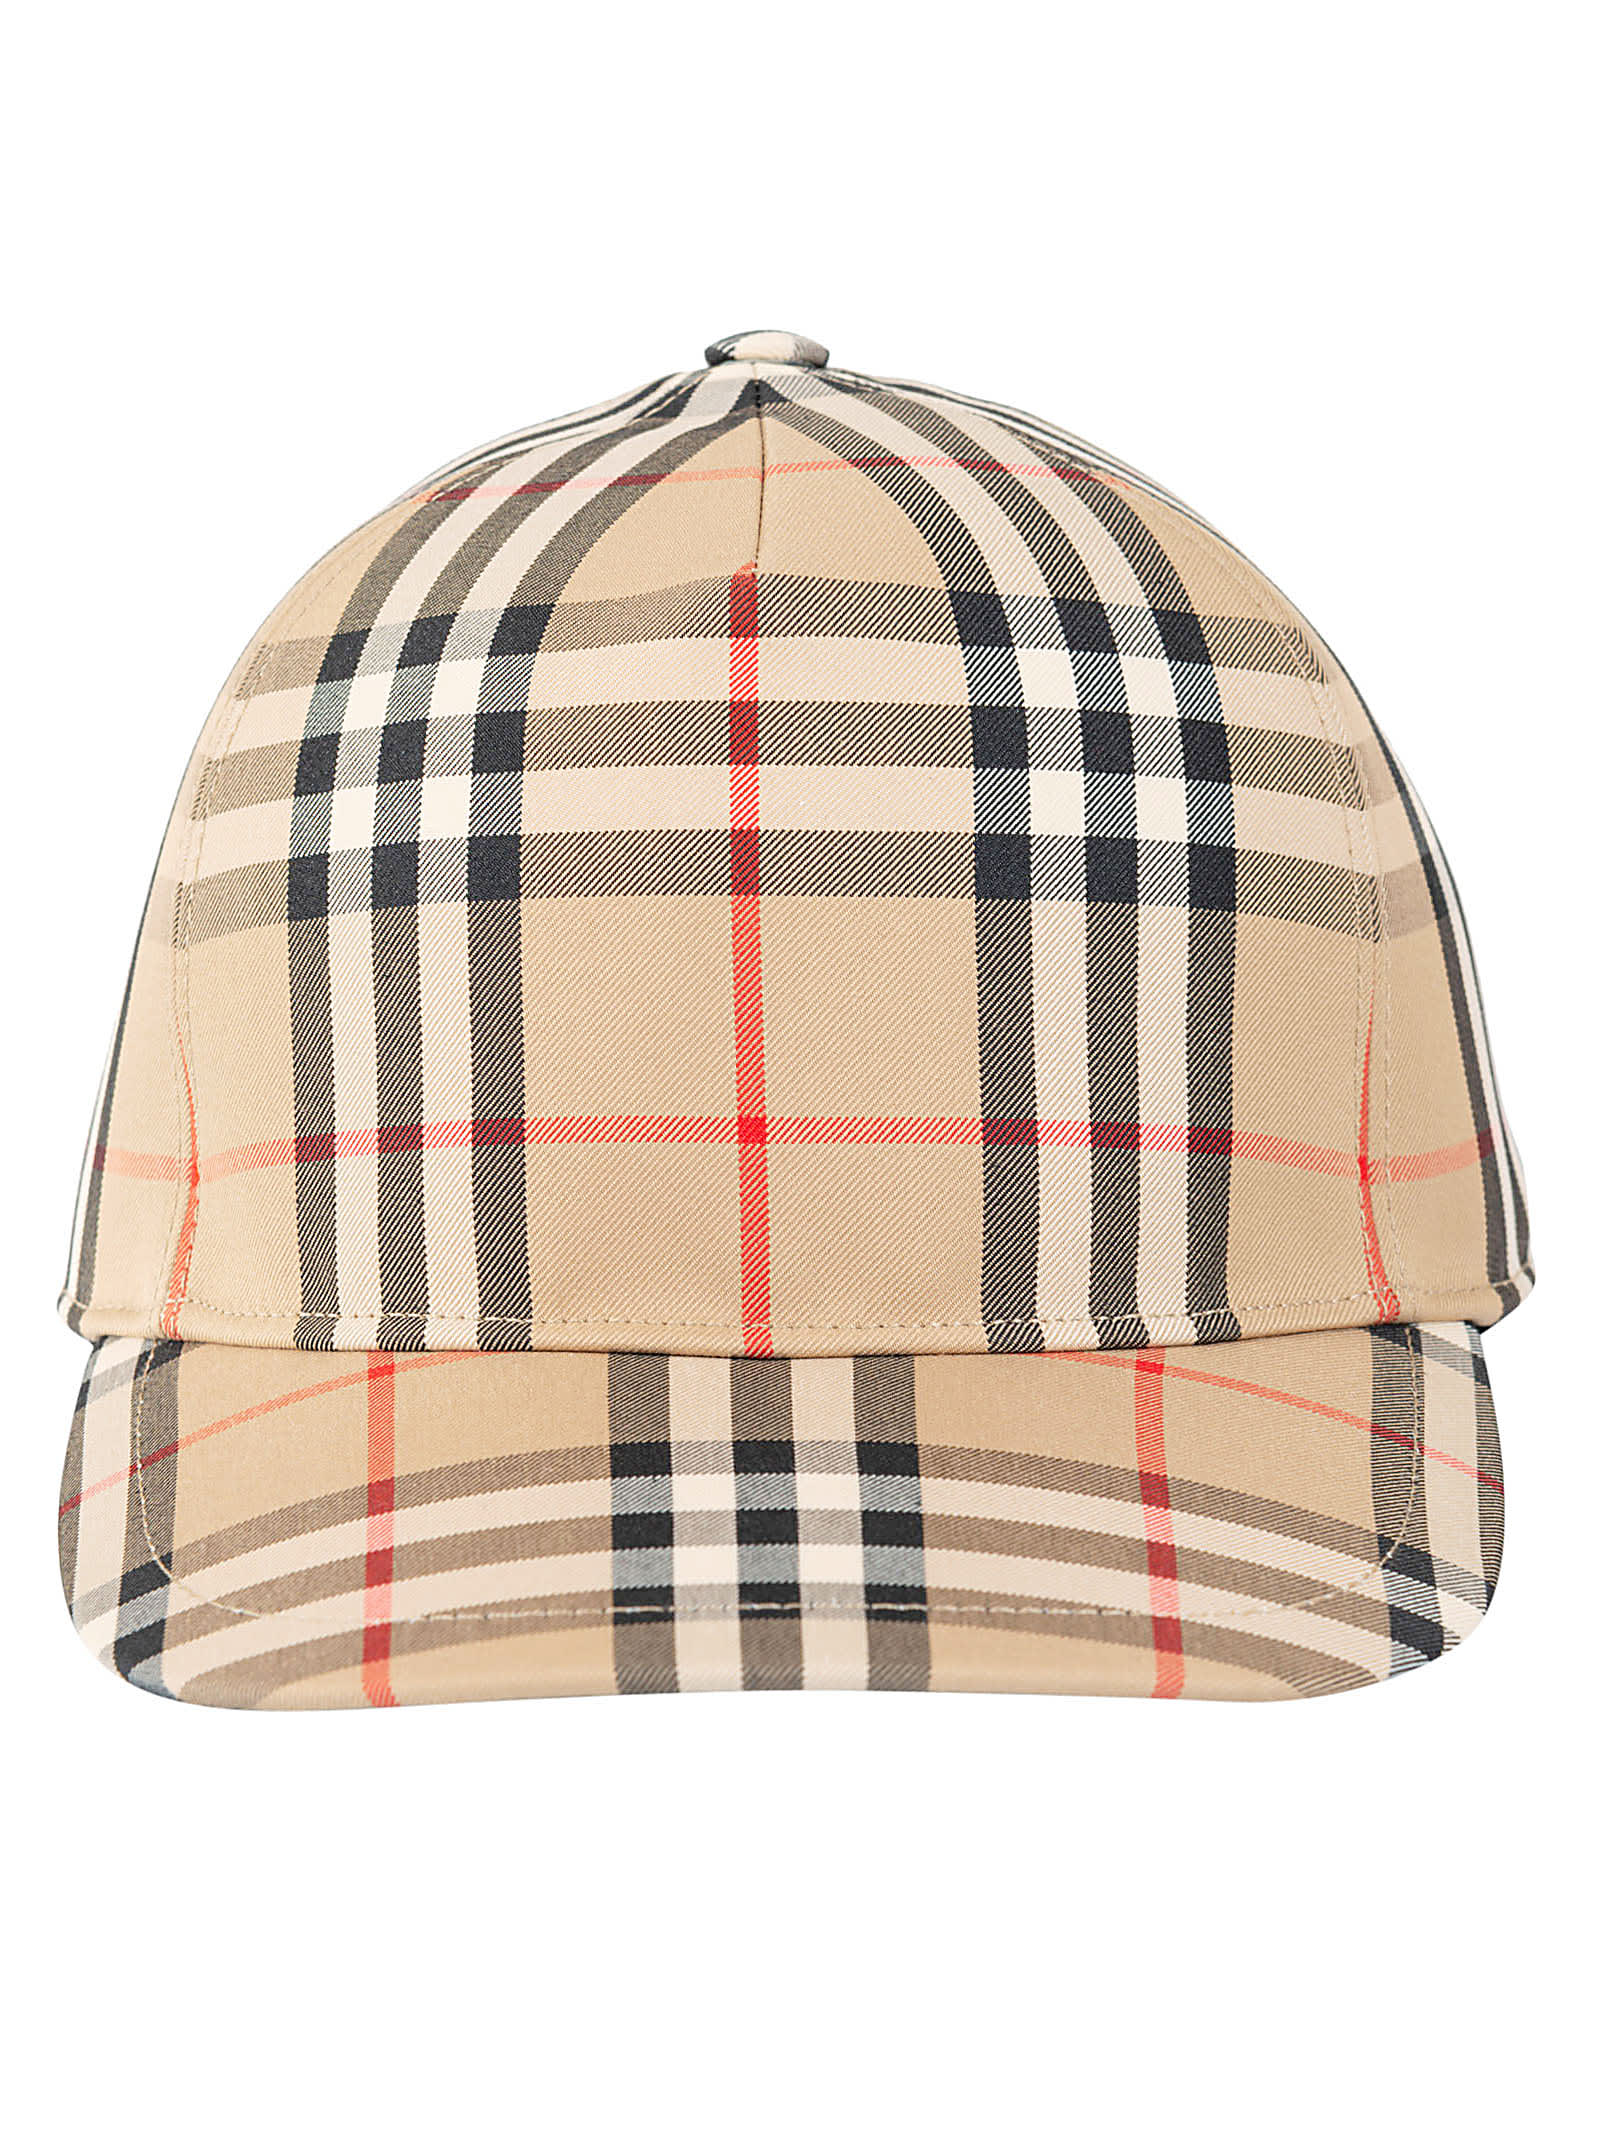 Burberry Hats | italist, ALWAYS LIKE A SALE